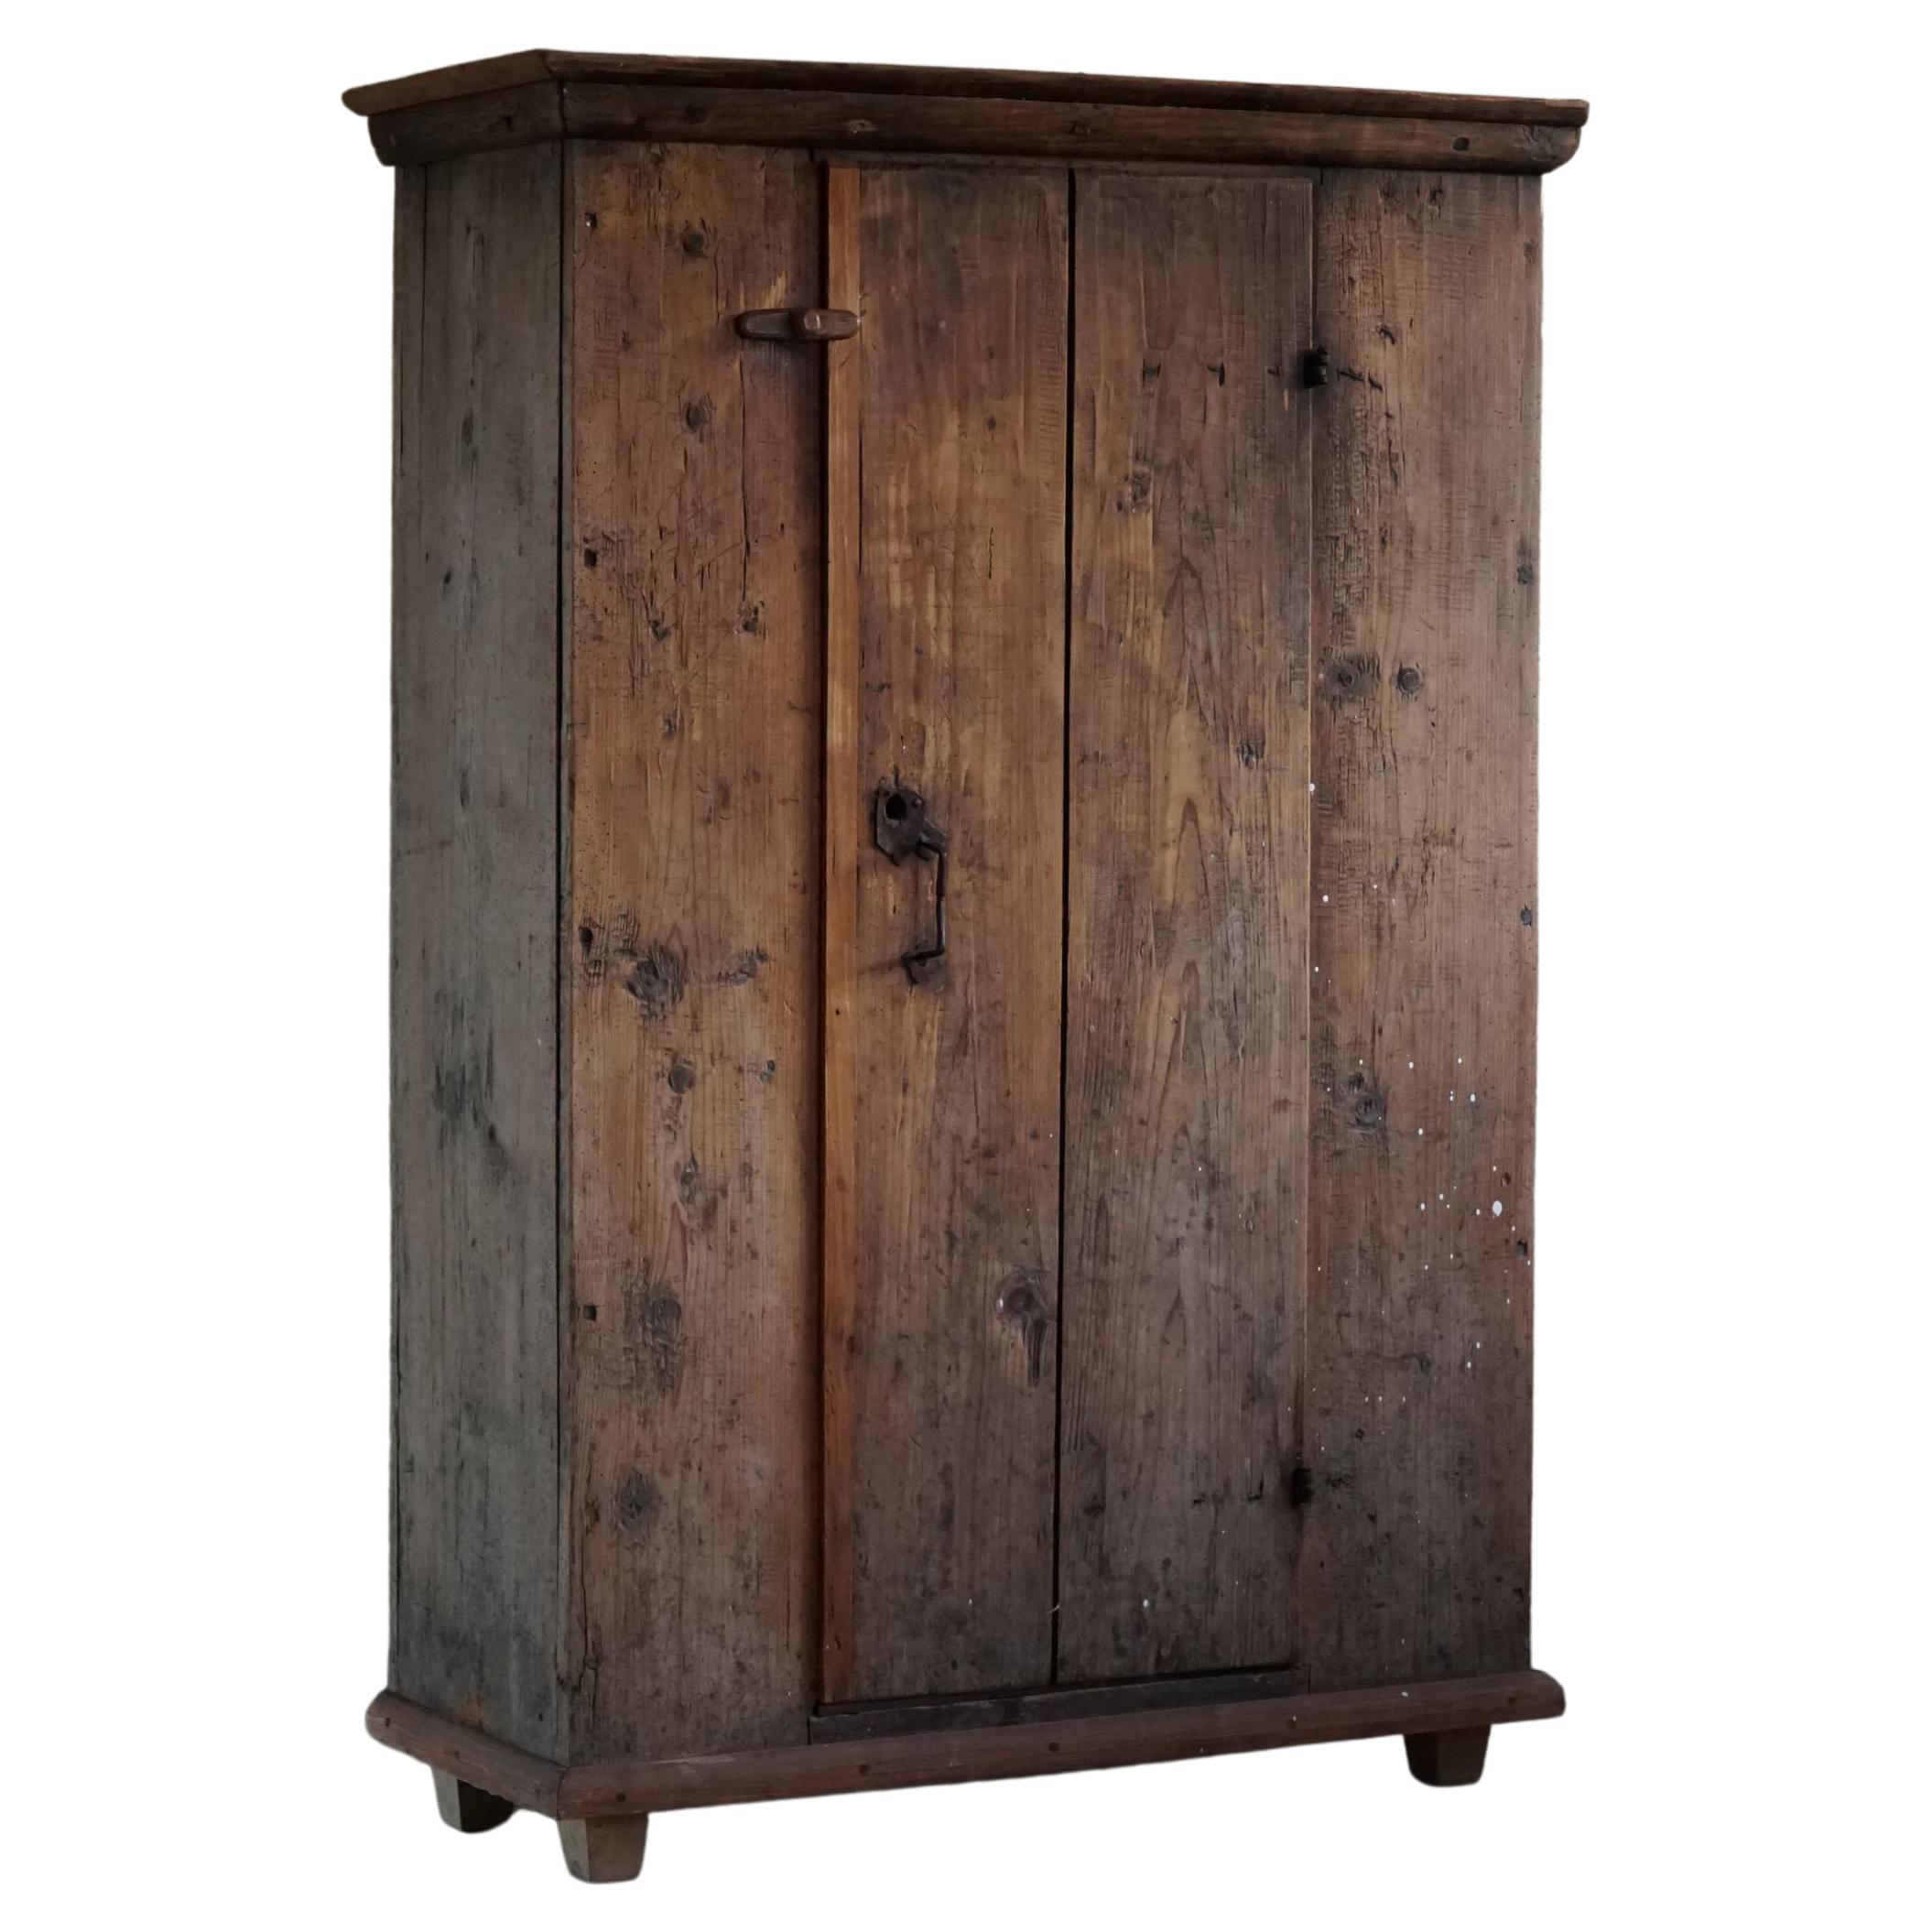 18th Century Wabi Sabi Antique Cabinet in Pine, Handcrafted in Sweden